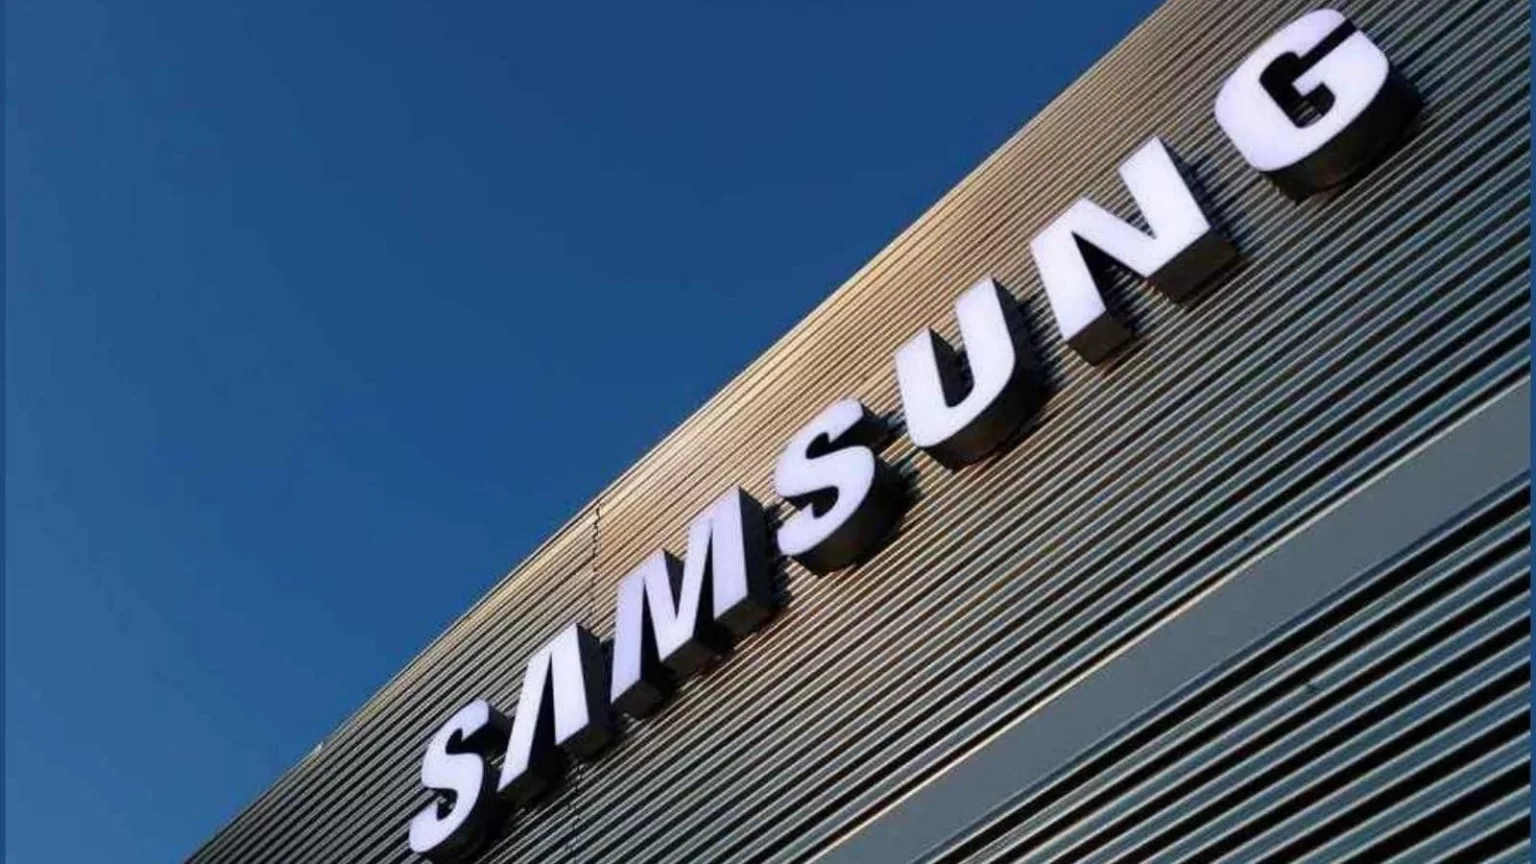 samsung reuters img 163498304416x9 1 1536x864 - Samsung to invest $46 million dollars in robotics